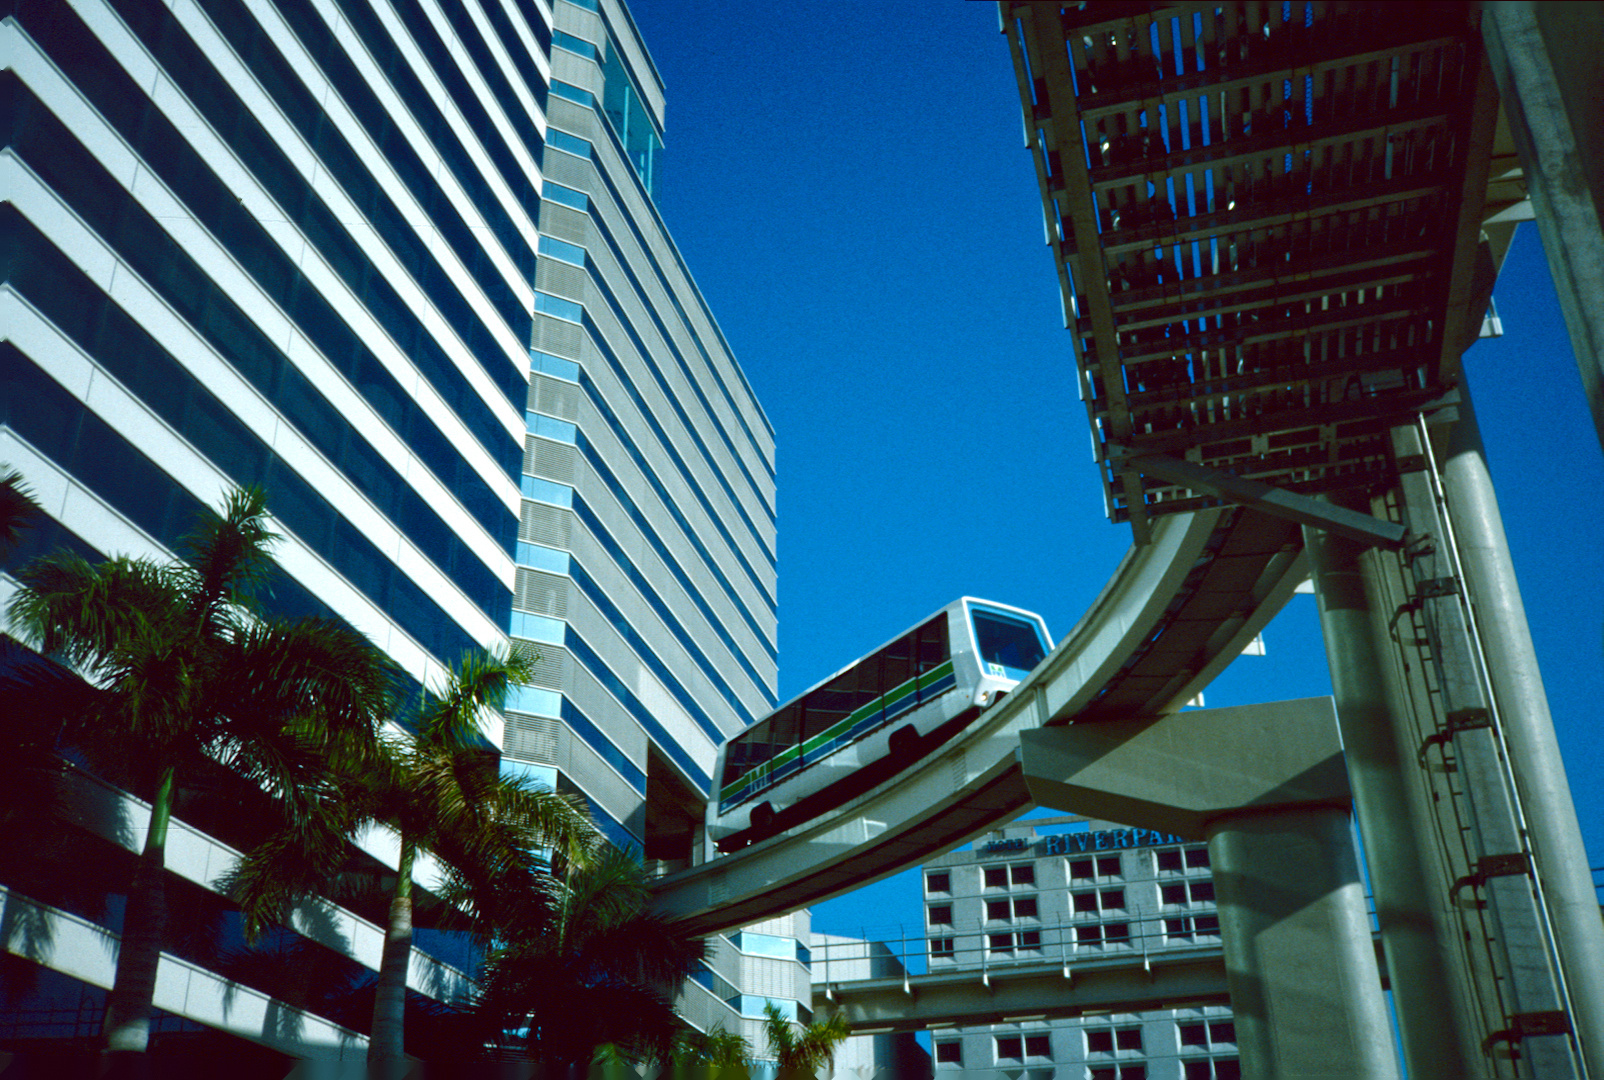 Miami Downtown, FL - 1989